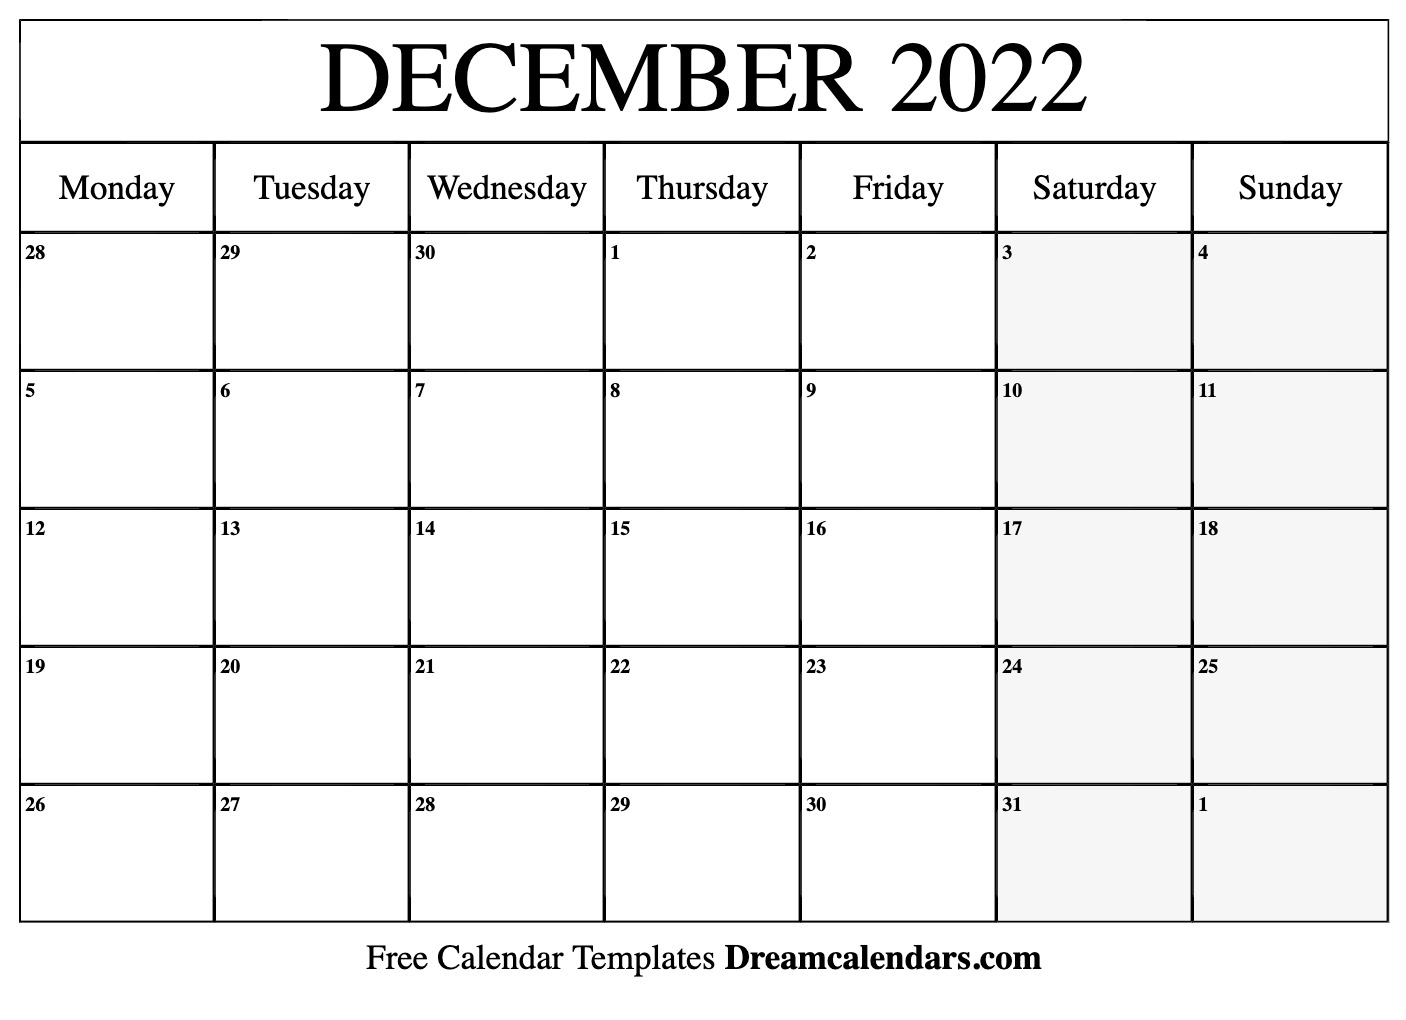 December Calendar Template 2022 Download Printable December 2022 Calendars